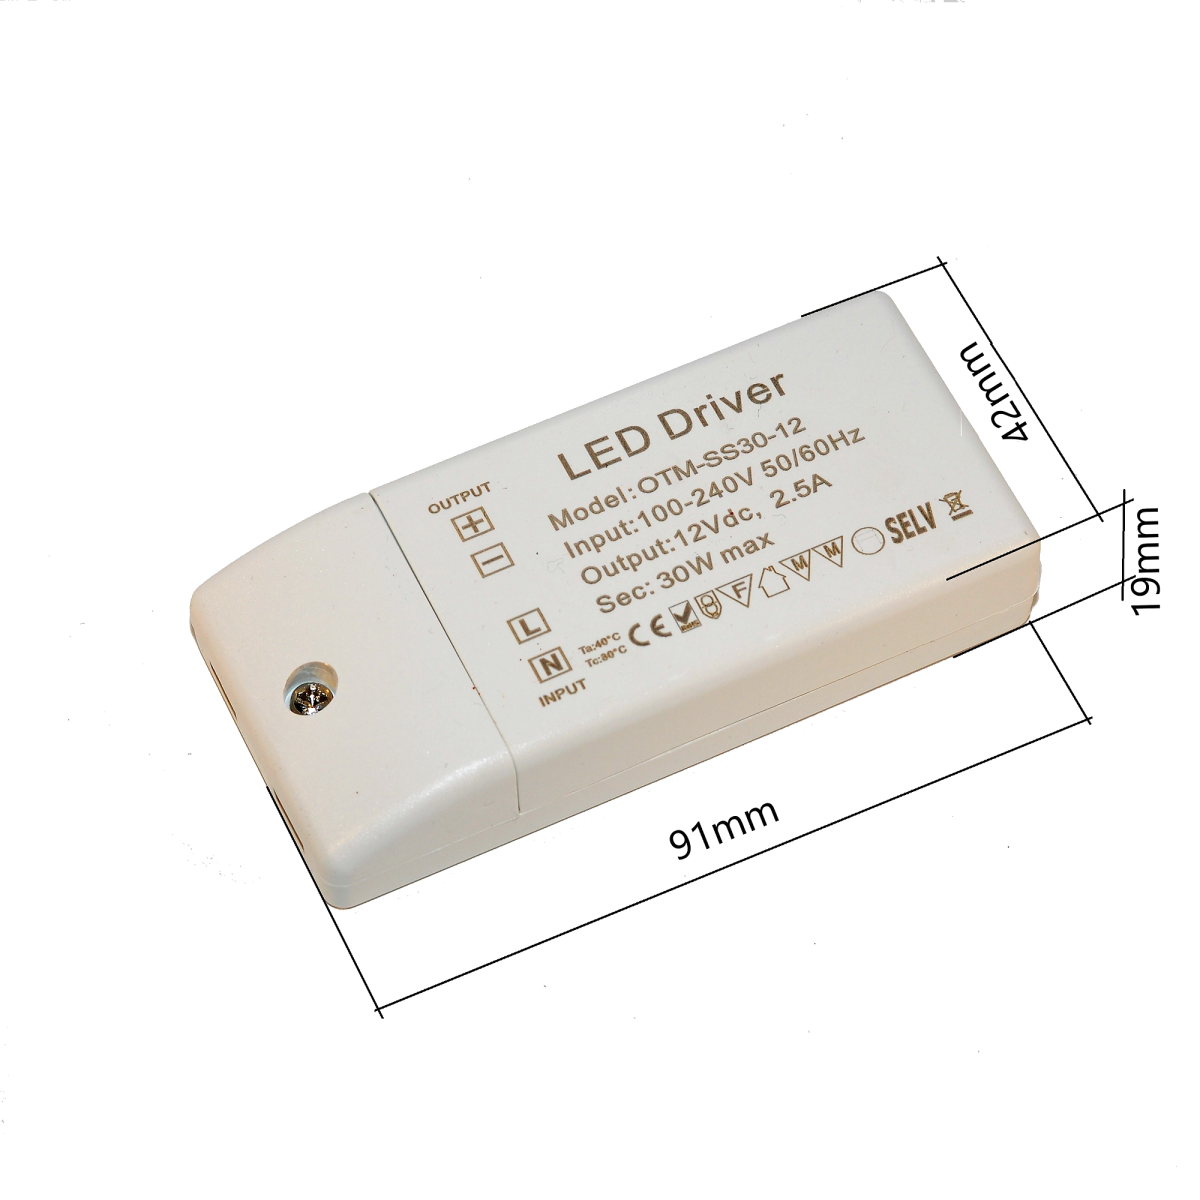 Superslim LED Transformator 30W 230V > 12V Netzteil Netzadapter Adapter Driver 